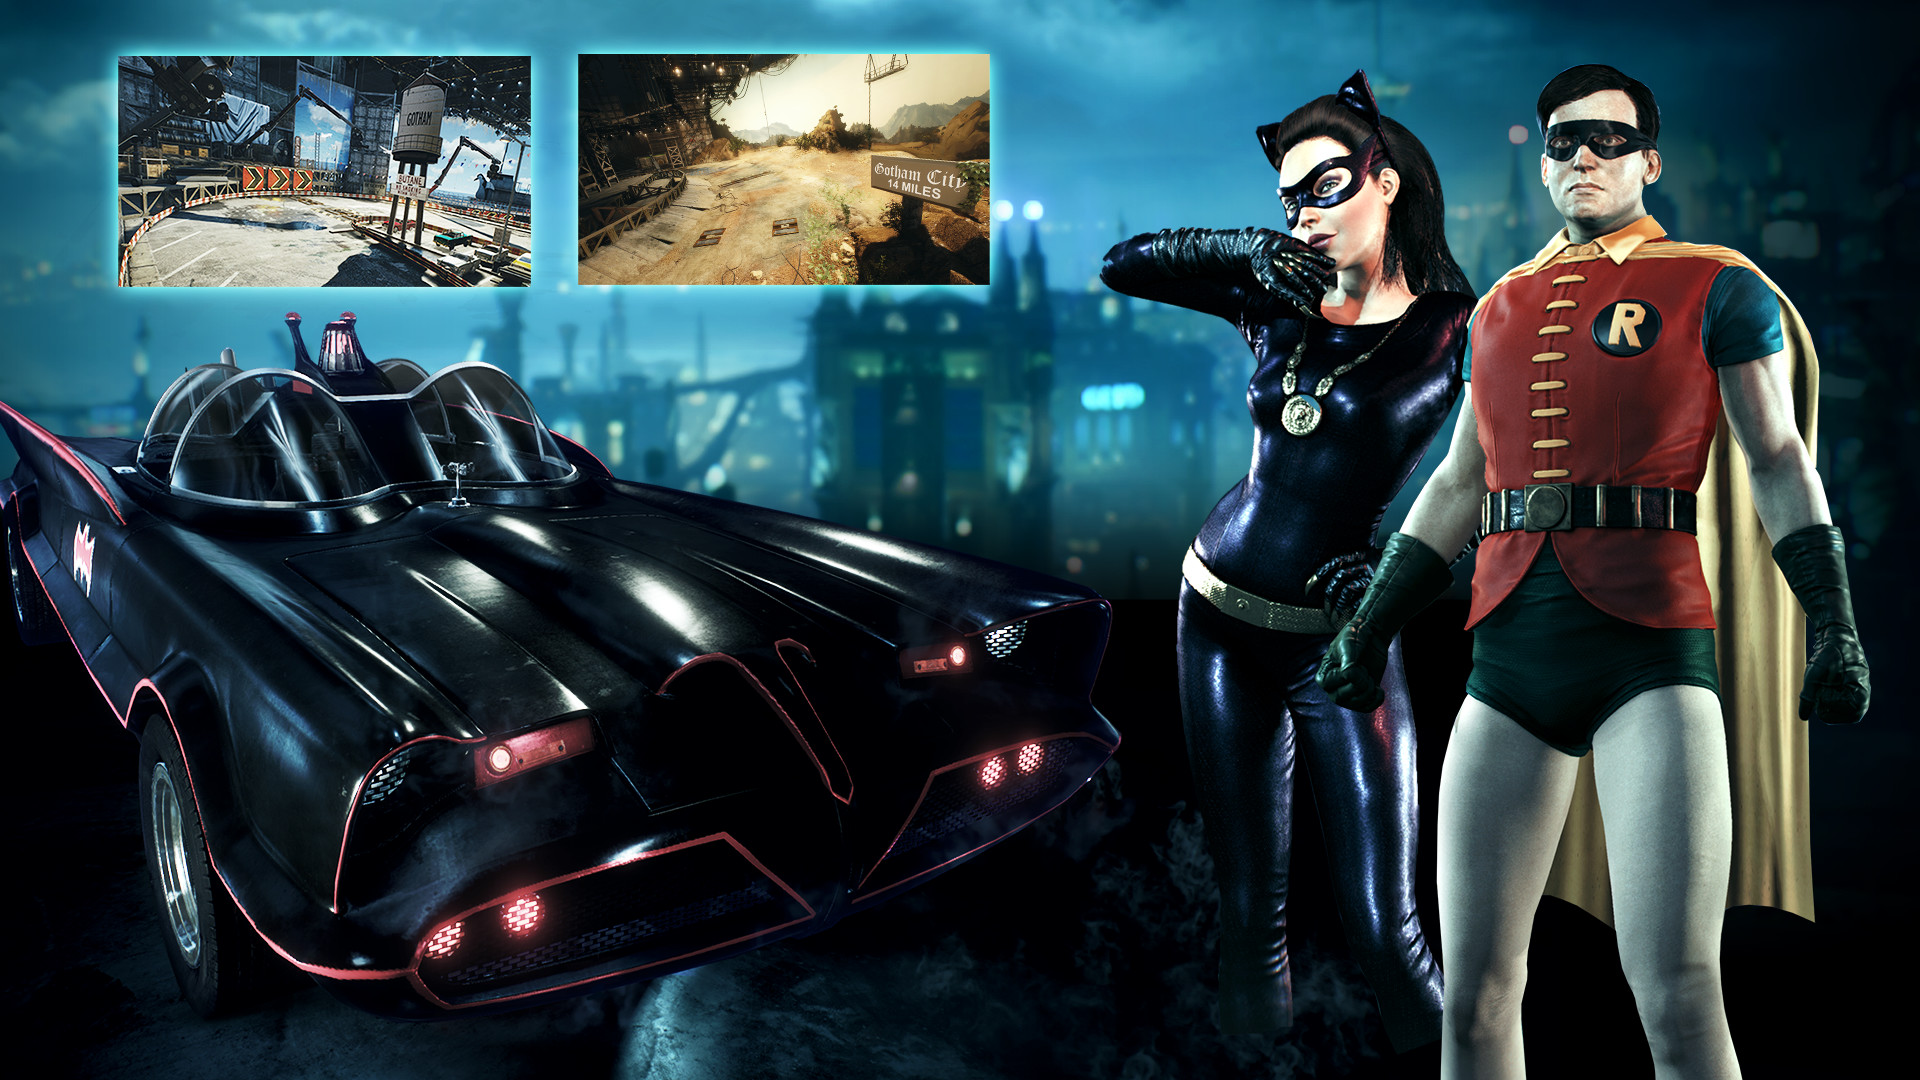 Batman™: Arkham Knight - Bat-Family Skin Pack on Steam